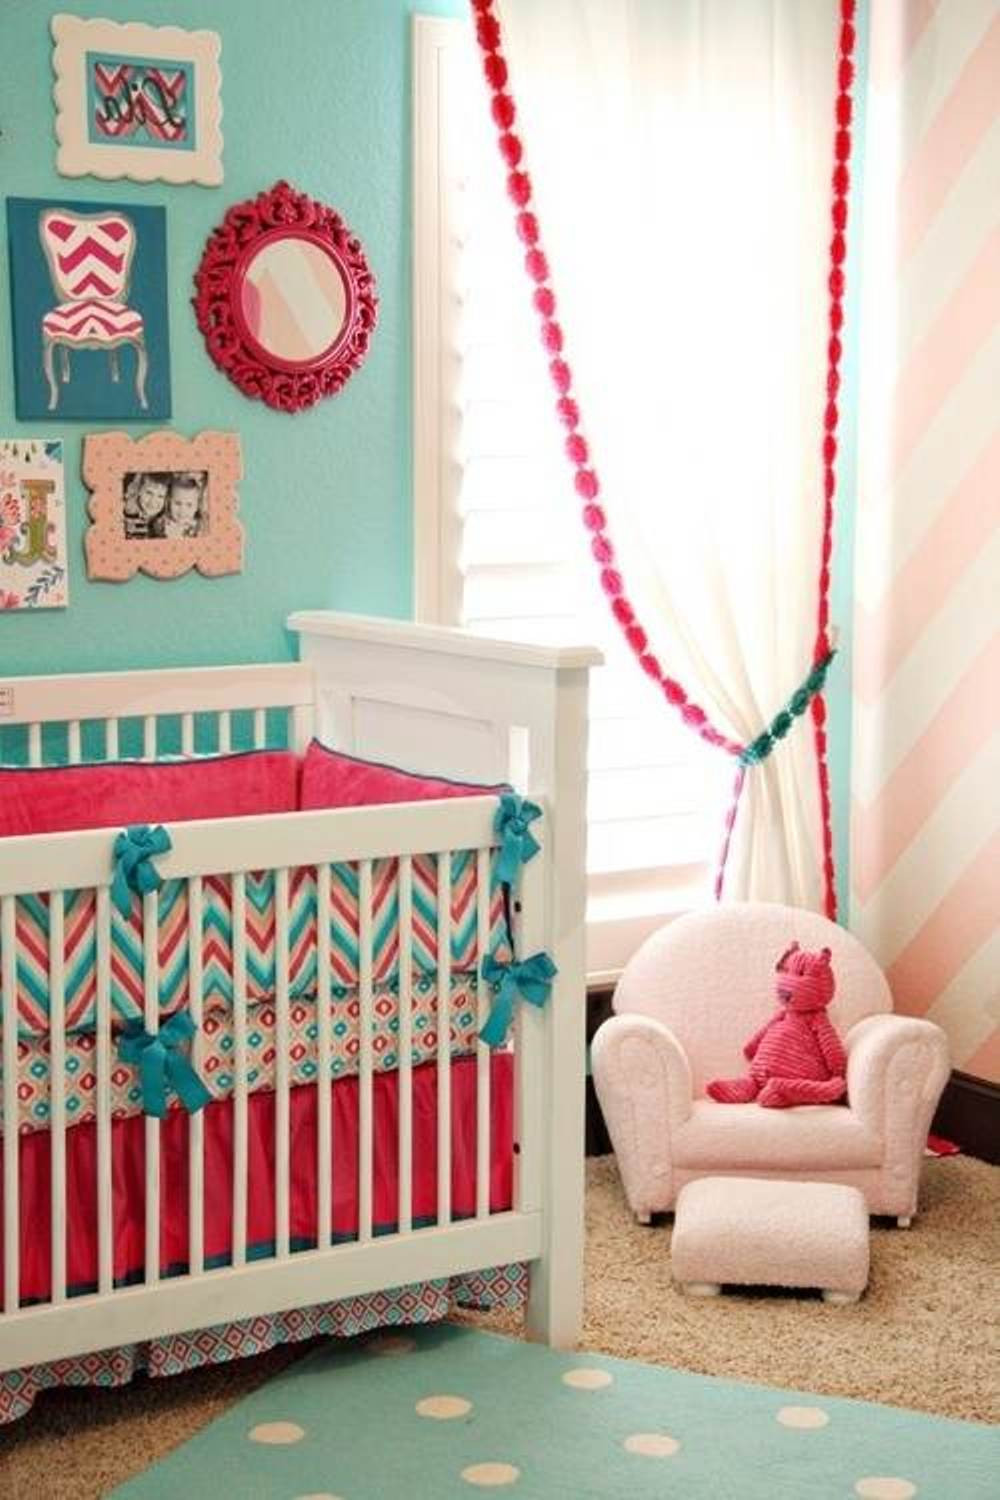 Baby Girl Room Decoration Ideas
 25 Baby Bedroom Design Ideas For Your Cutie Pie